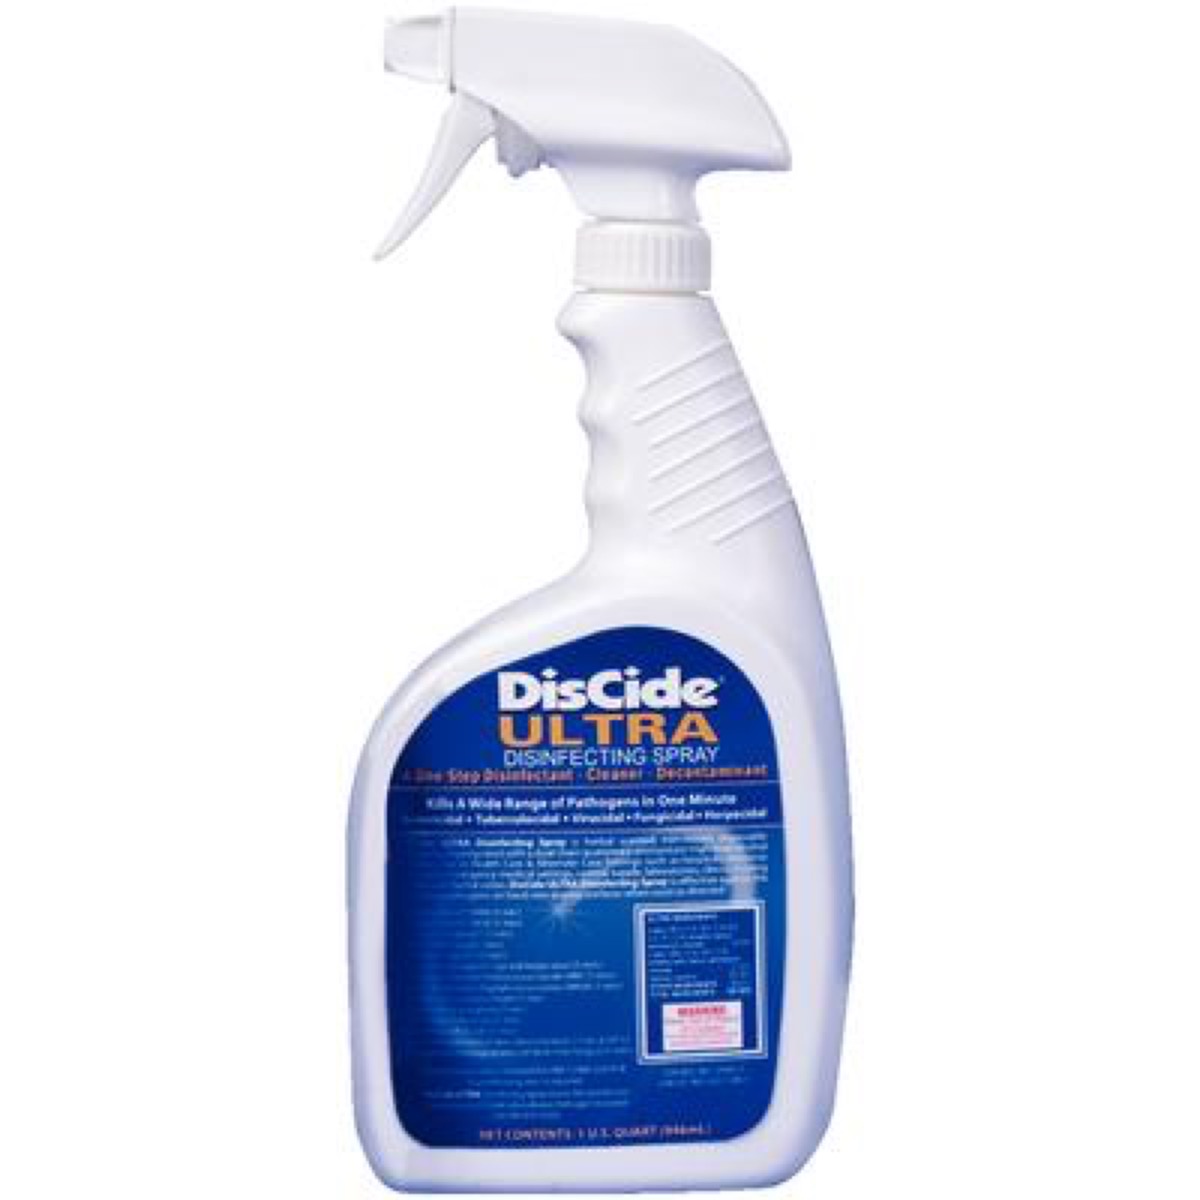 Discide Ultra Disinfecting Spray